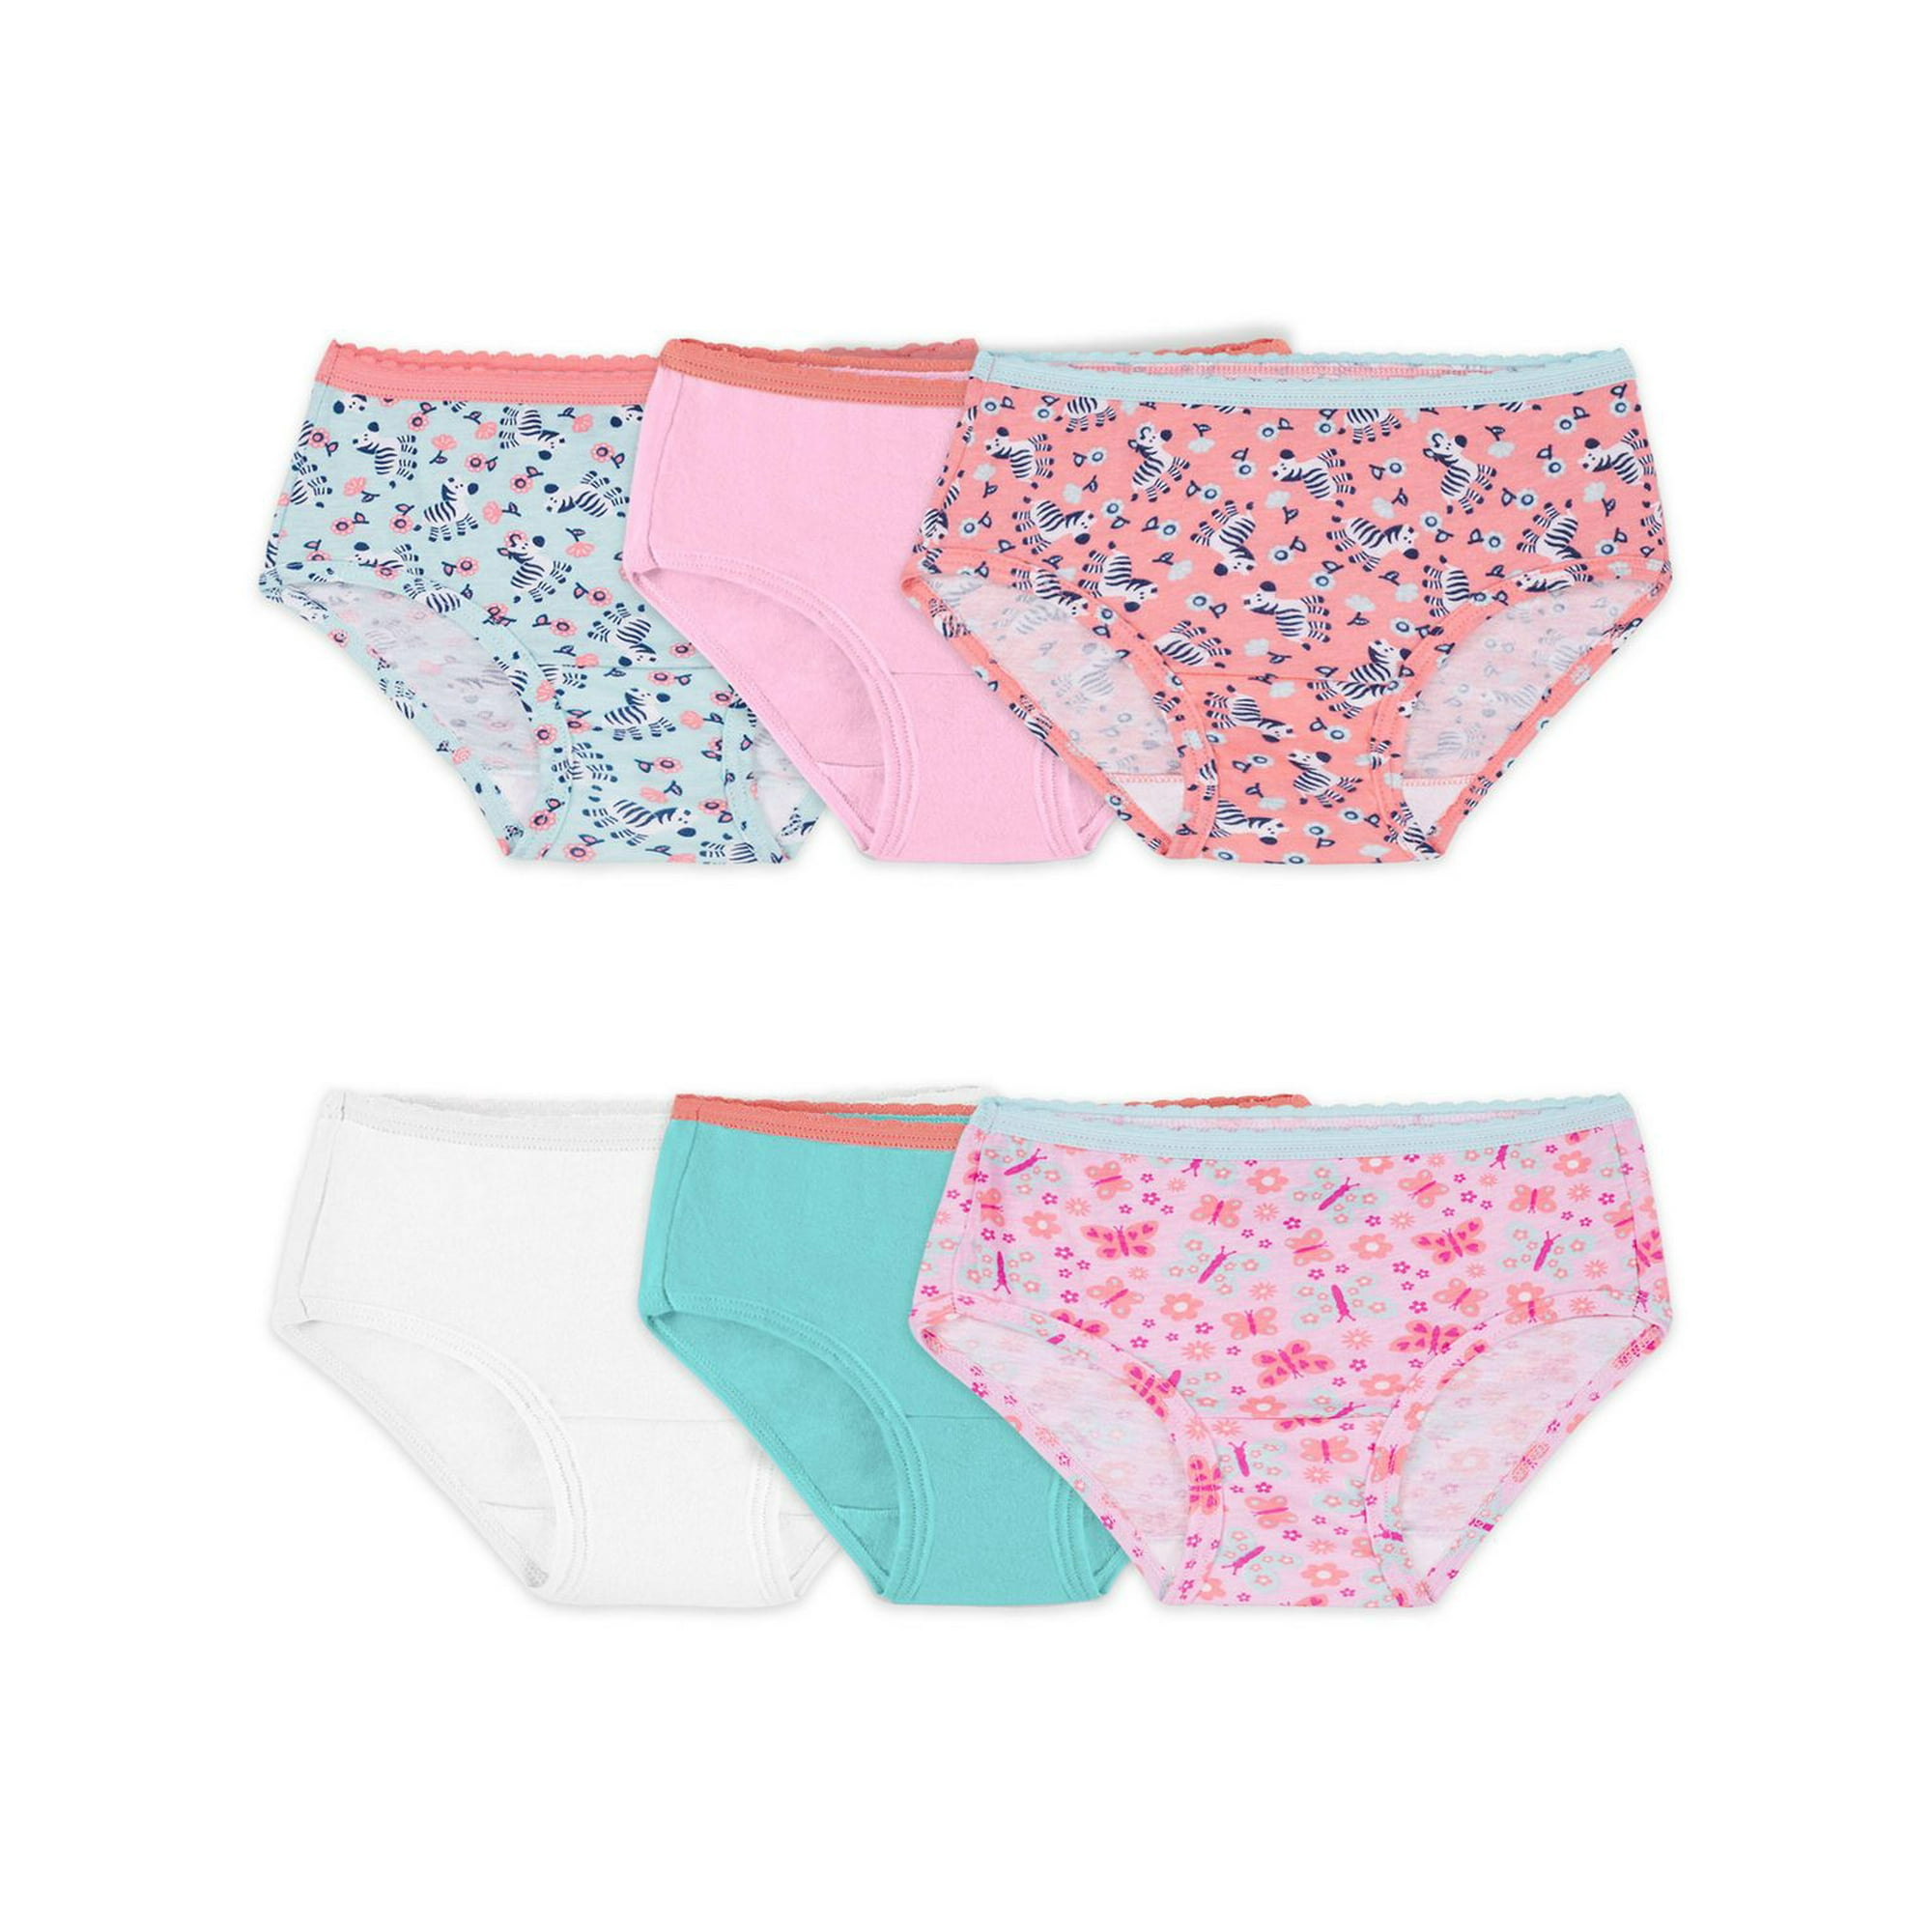  Little Girl Cotton Underwear Toddler Girls Panties Soft Briefs  Size 4T